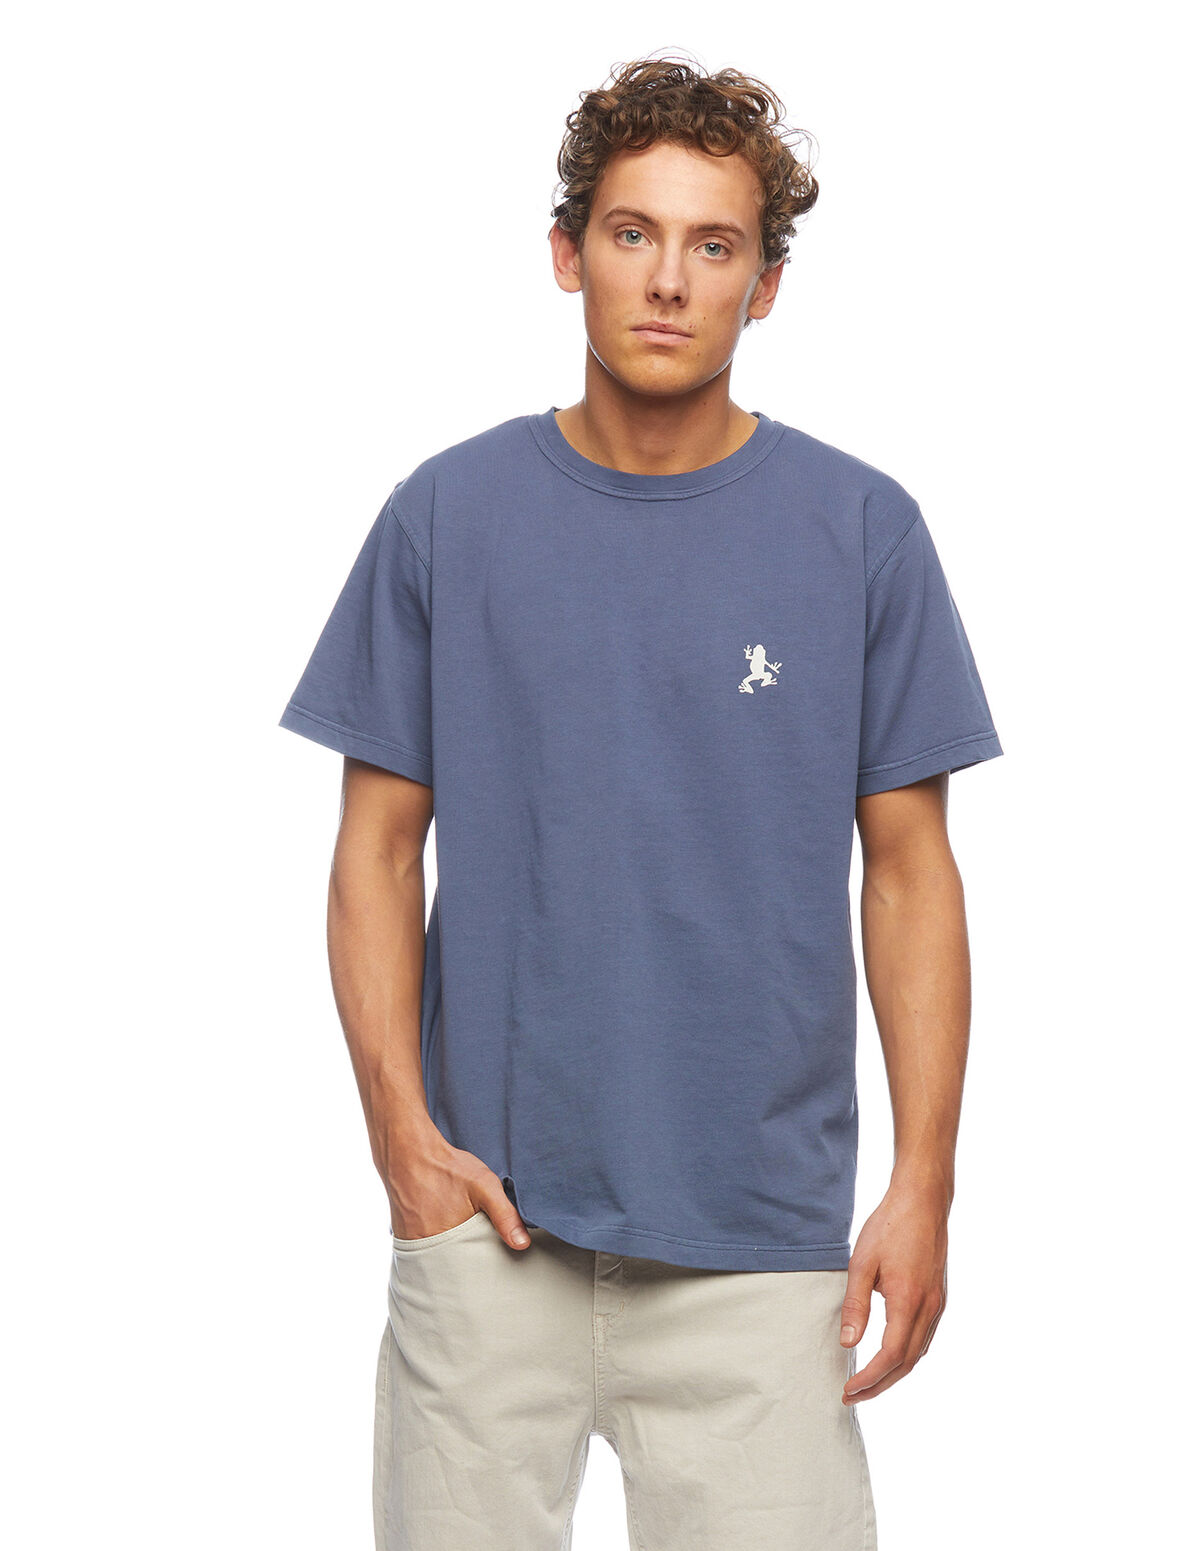 Camiseta print rana azul - Camisetas - Nícoli